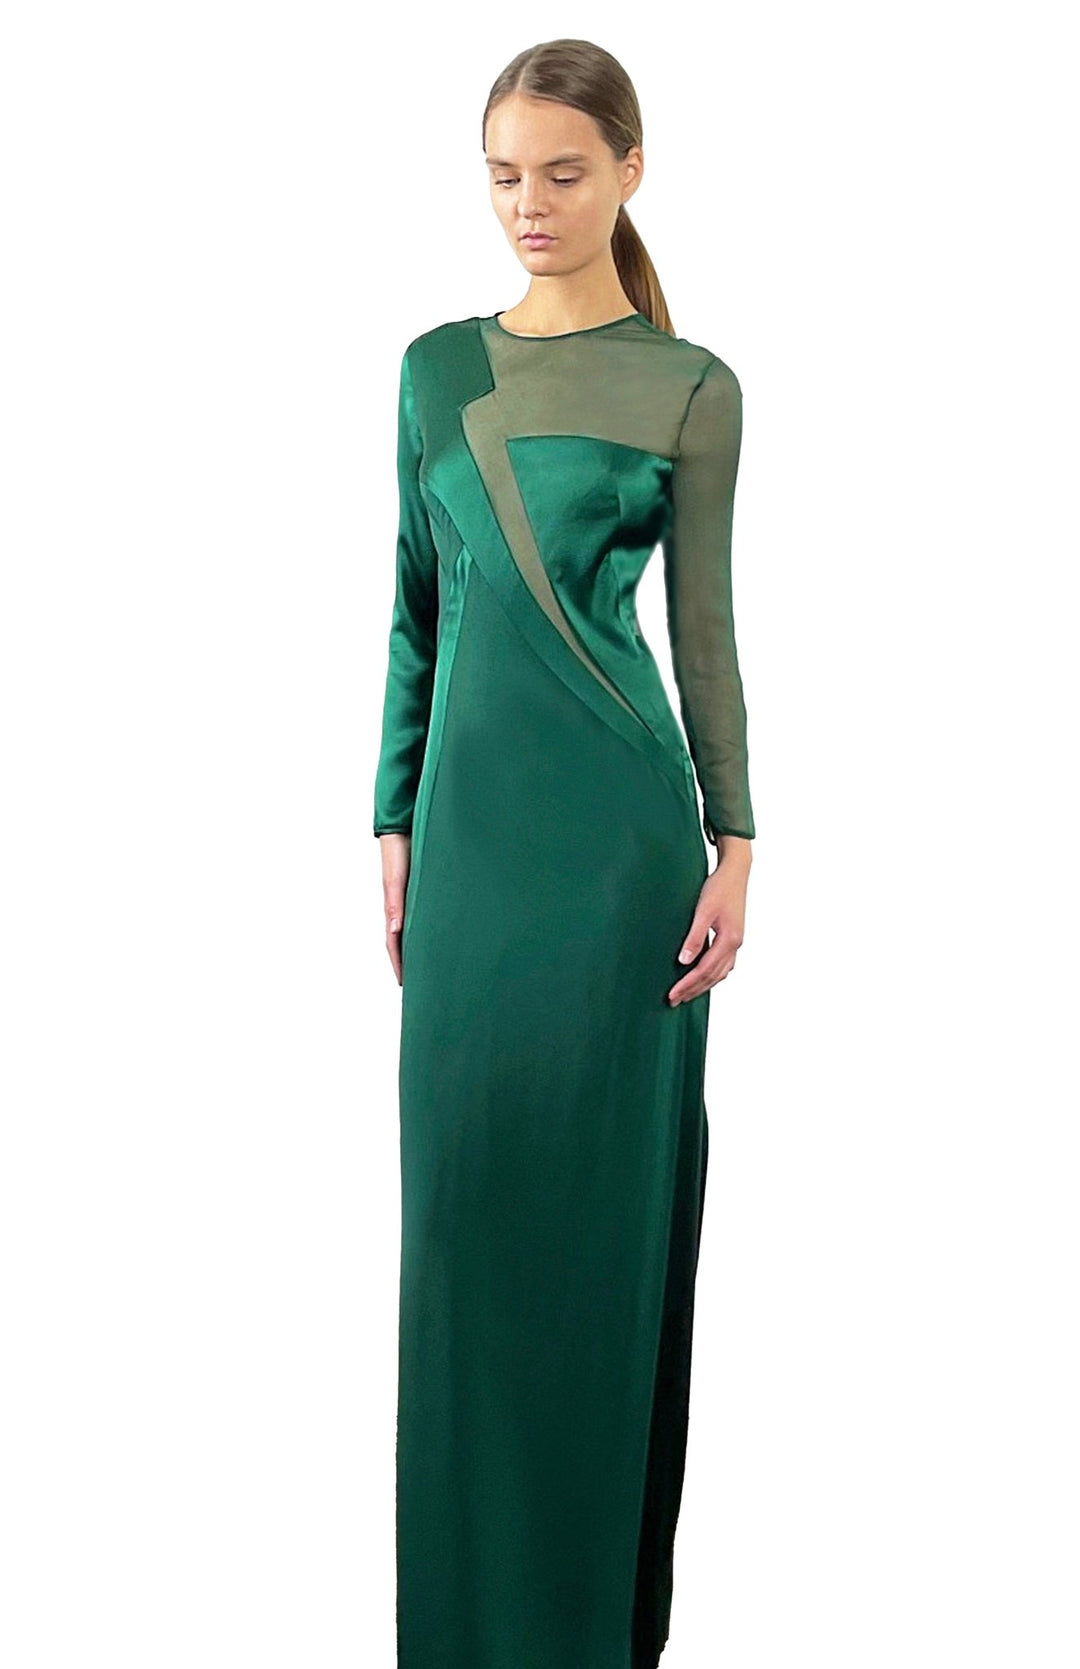 Emerald green silk satin dress